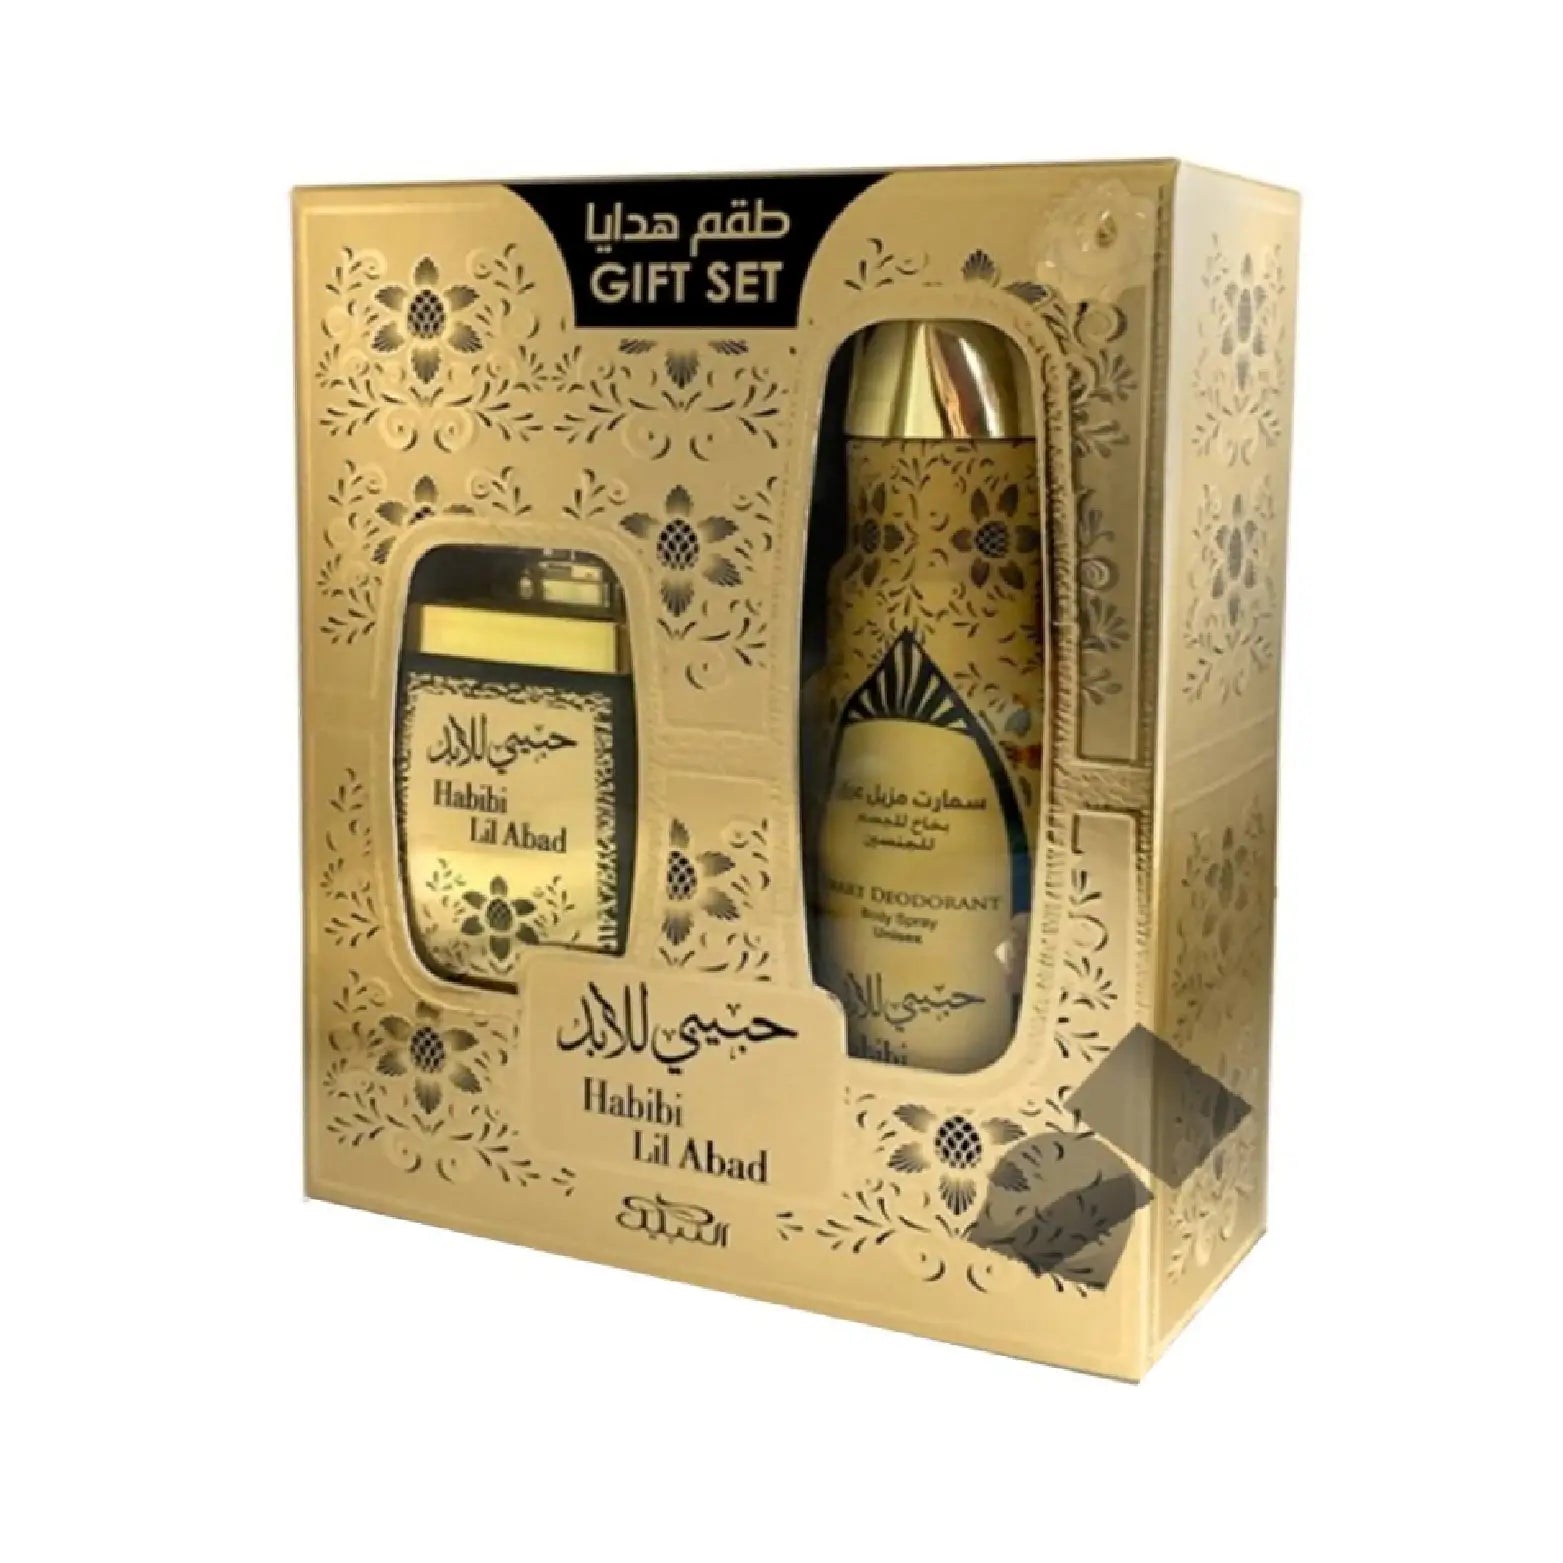 Habibi Lil Abaad Spray + Deo Gift Set by Nabeel | Khan El Khalili